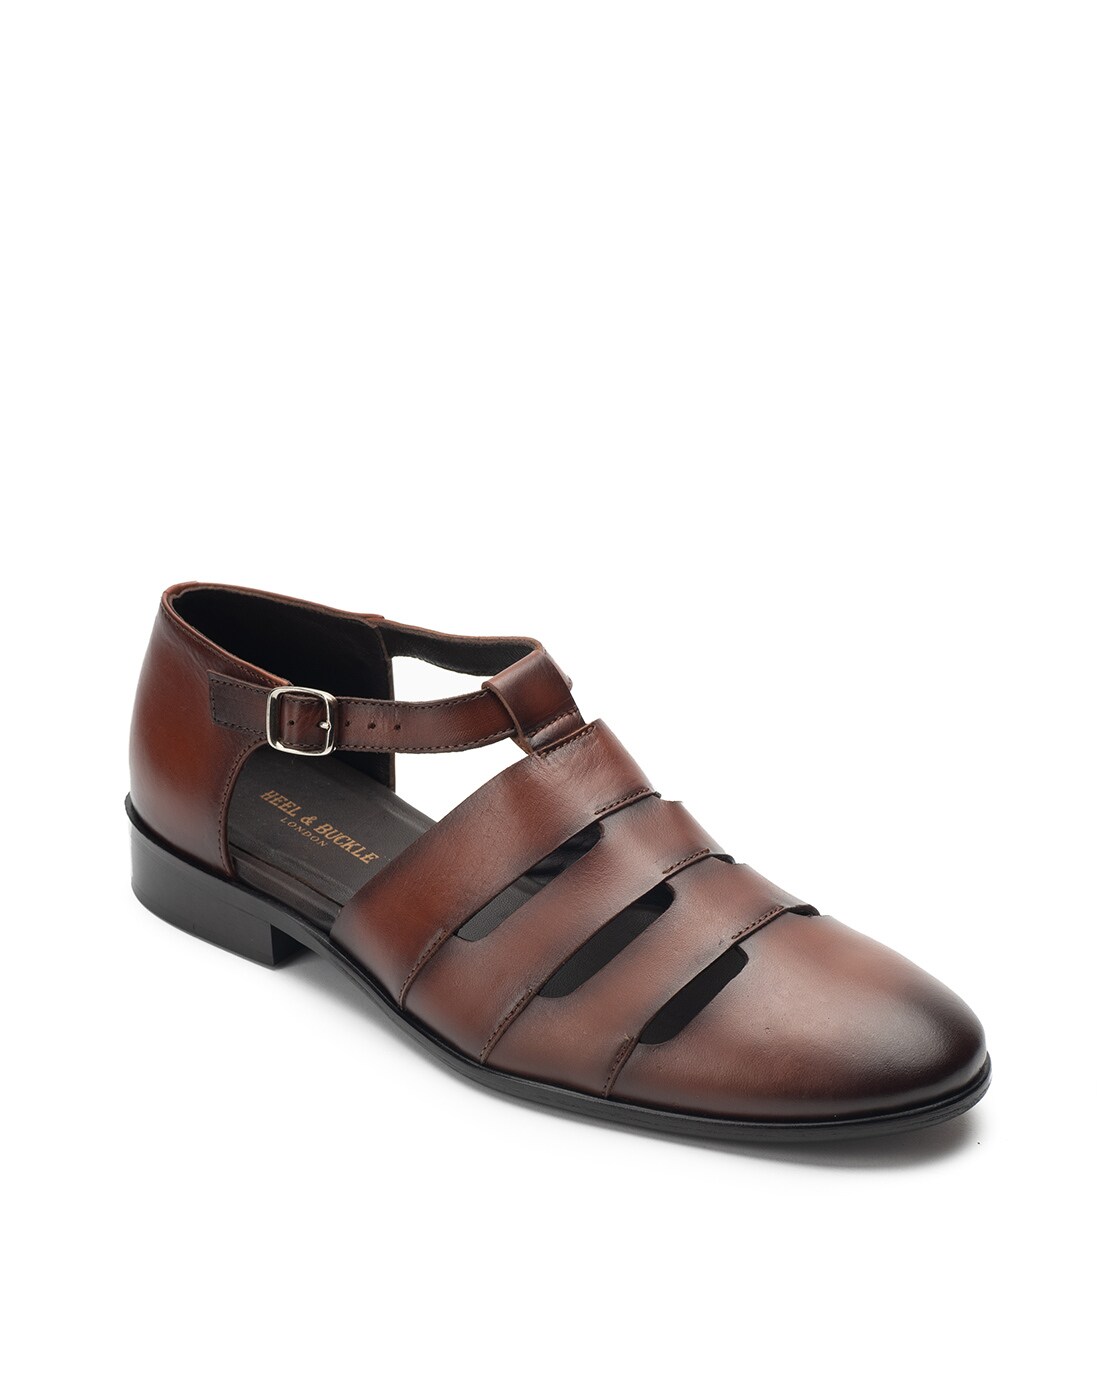 Buy Heel & Buckle London Men's Black Driver Loafer Shoes 6 UK (40 EU) at  Amazon.in